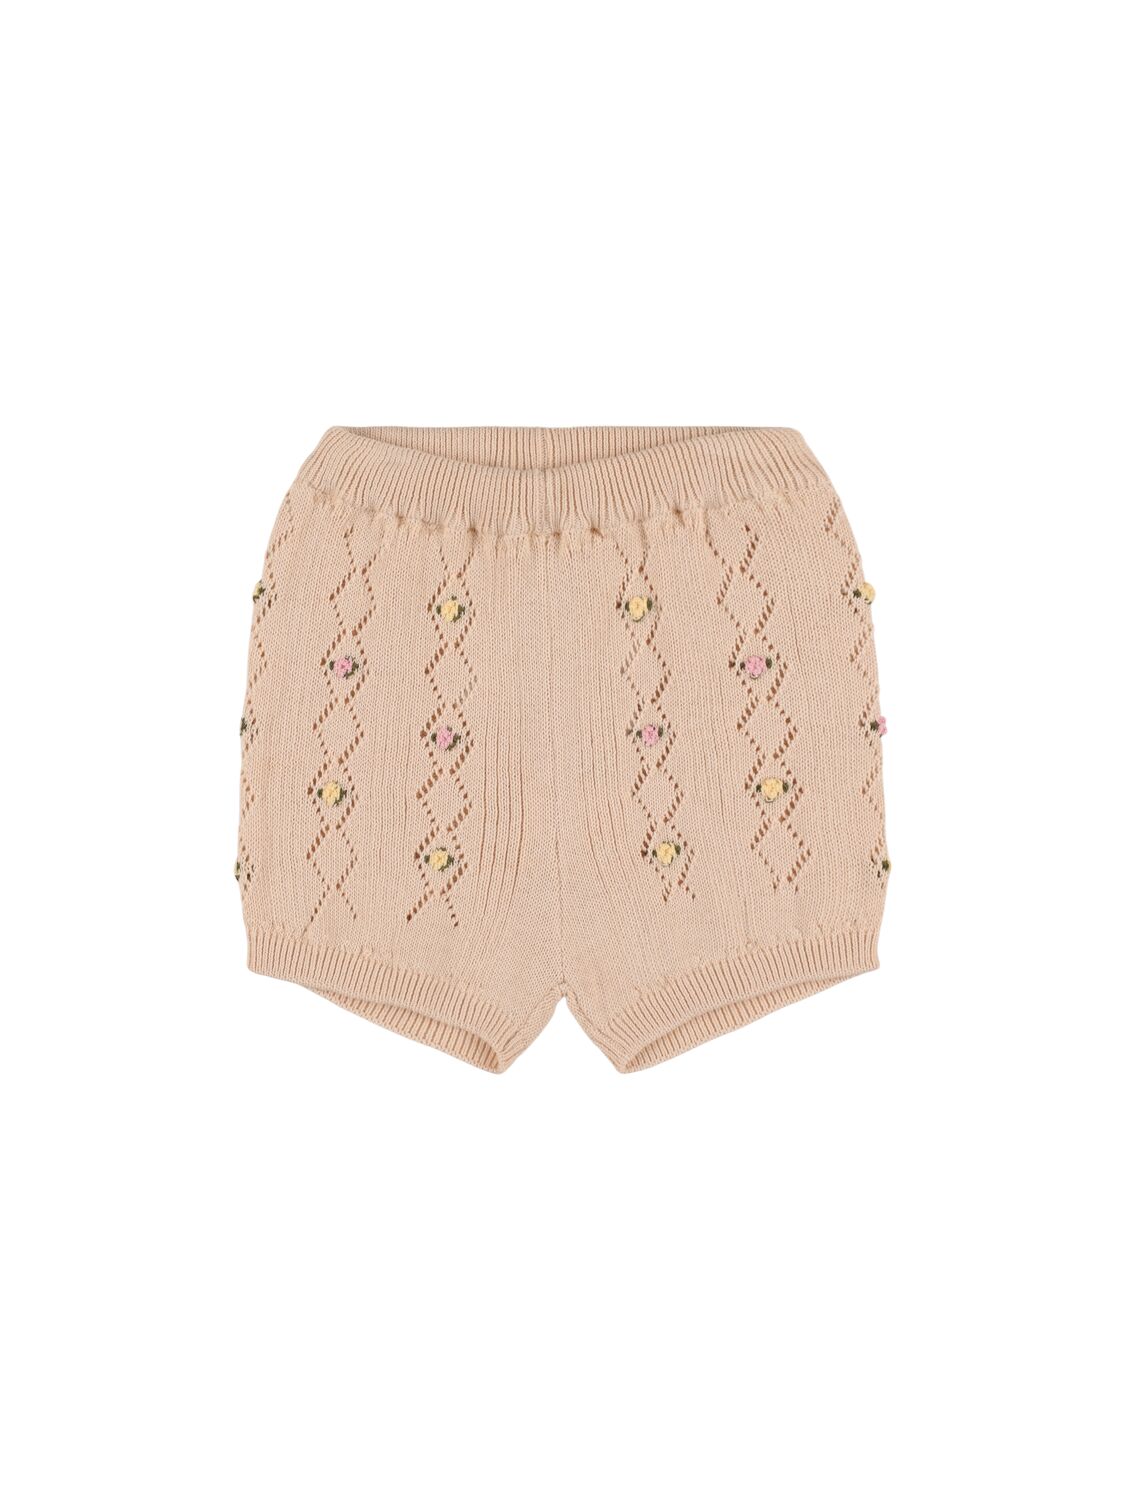 Image of Organic Cotton Knit Shorts